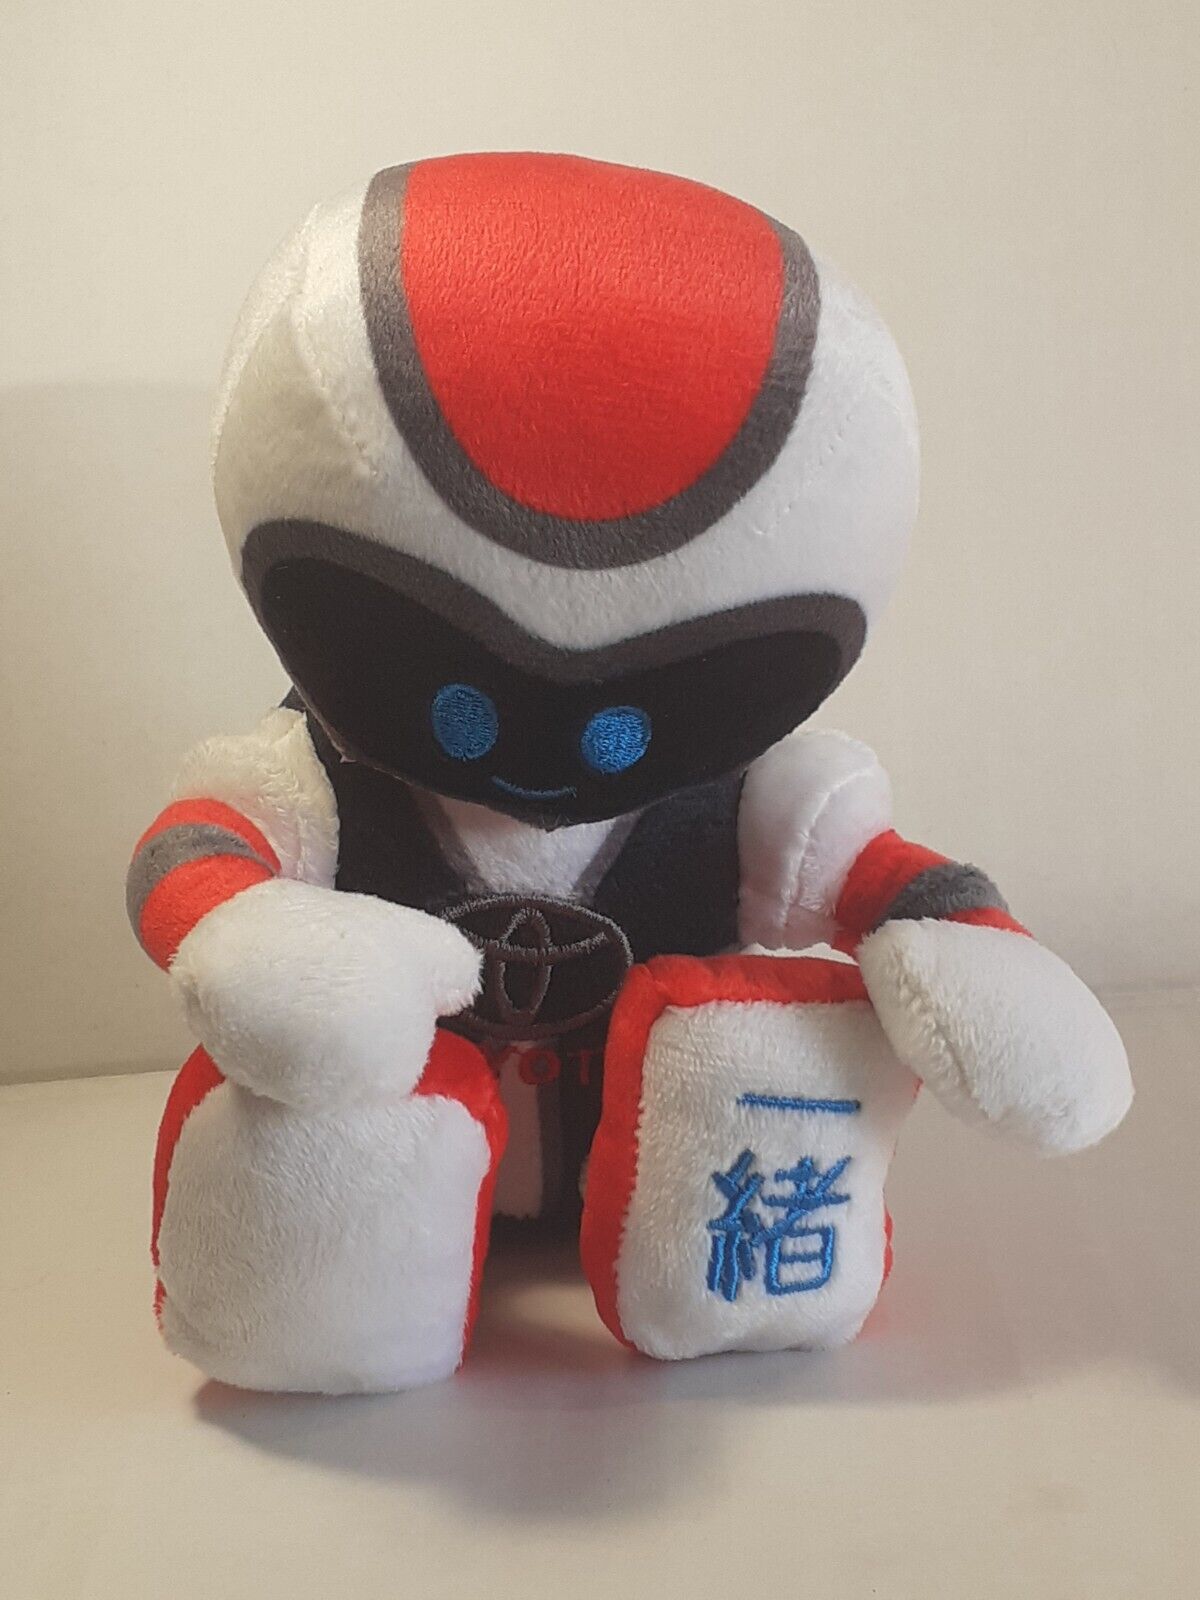 Toyota Promotional Plush Robot 7 inch soft toy